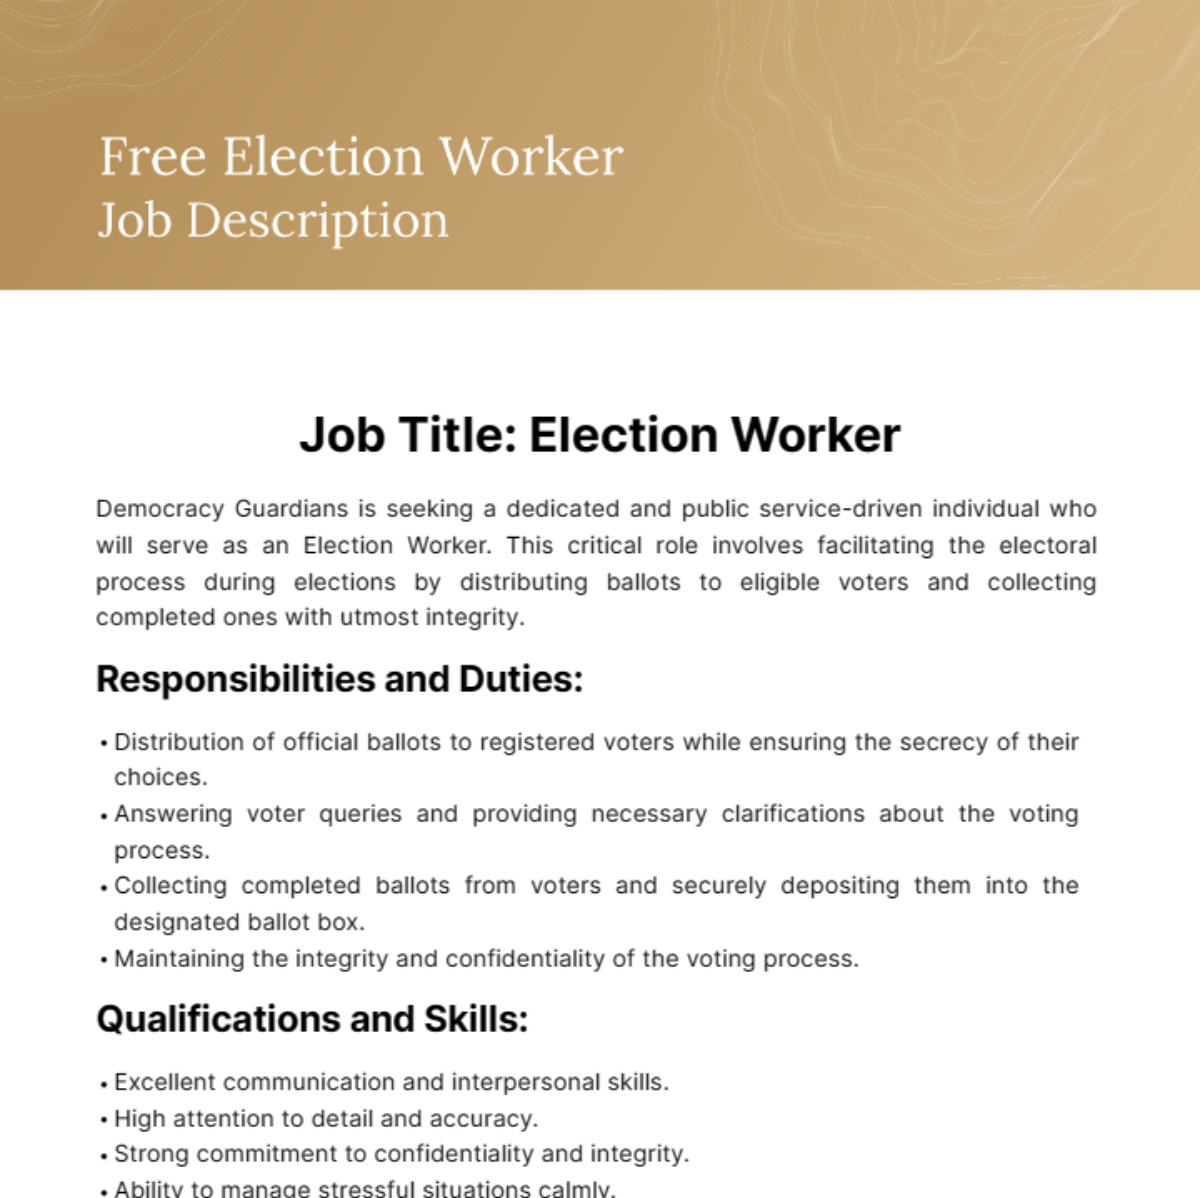 Free Election Worker Job Description Template